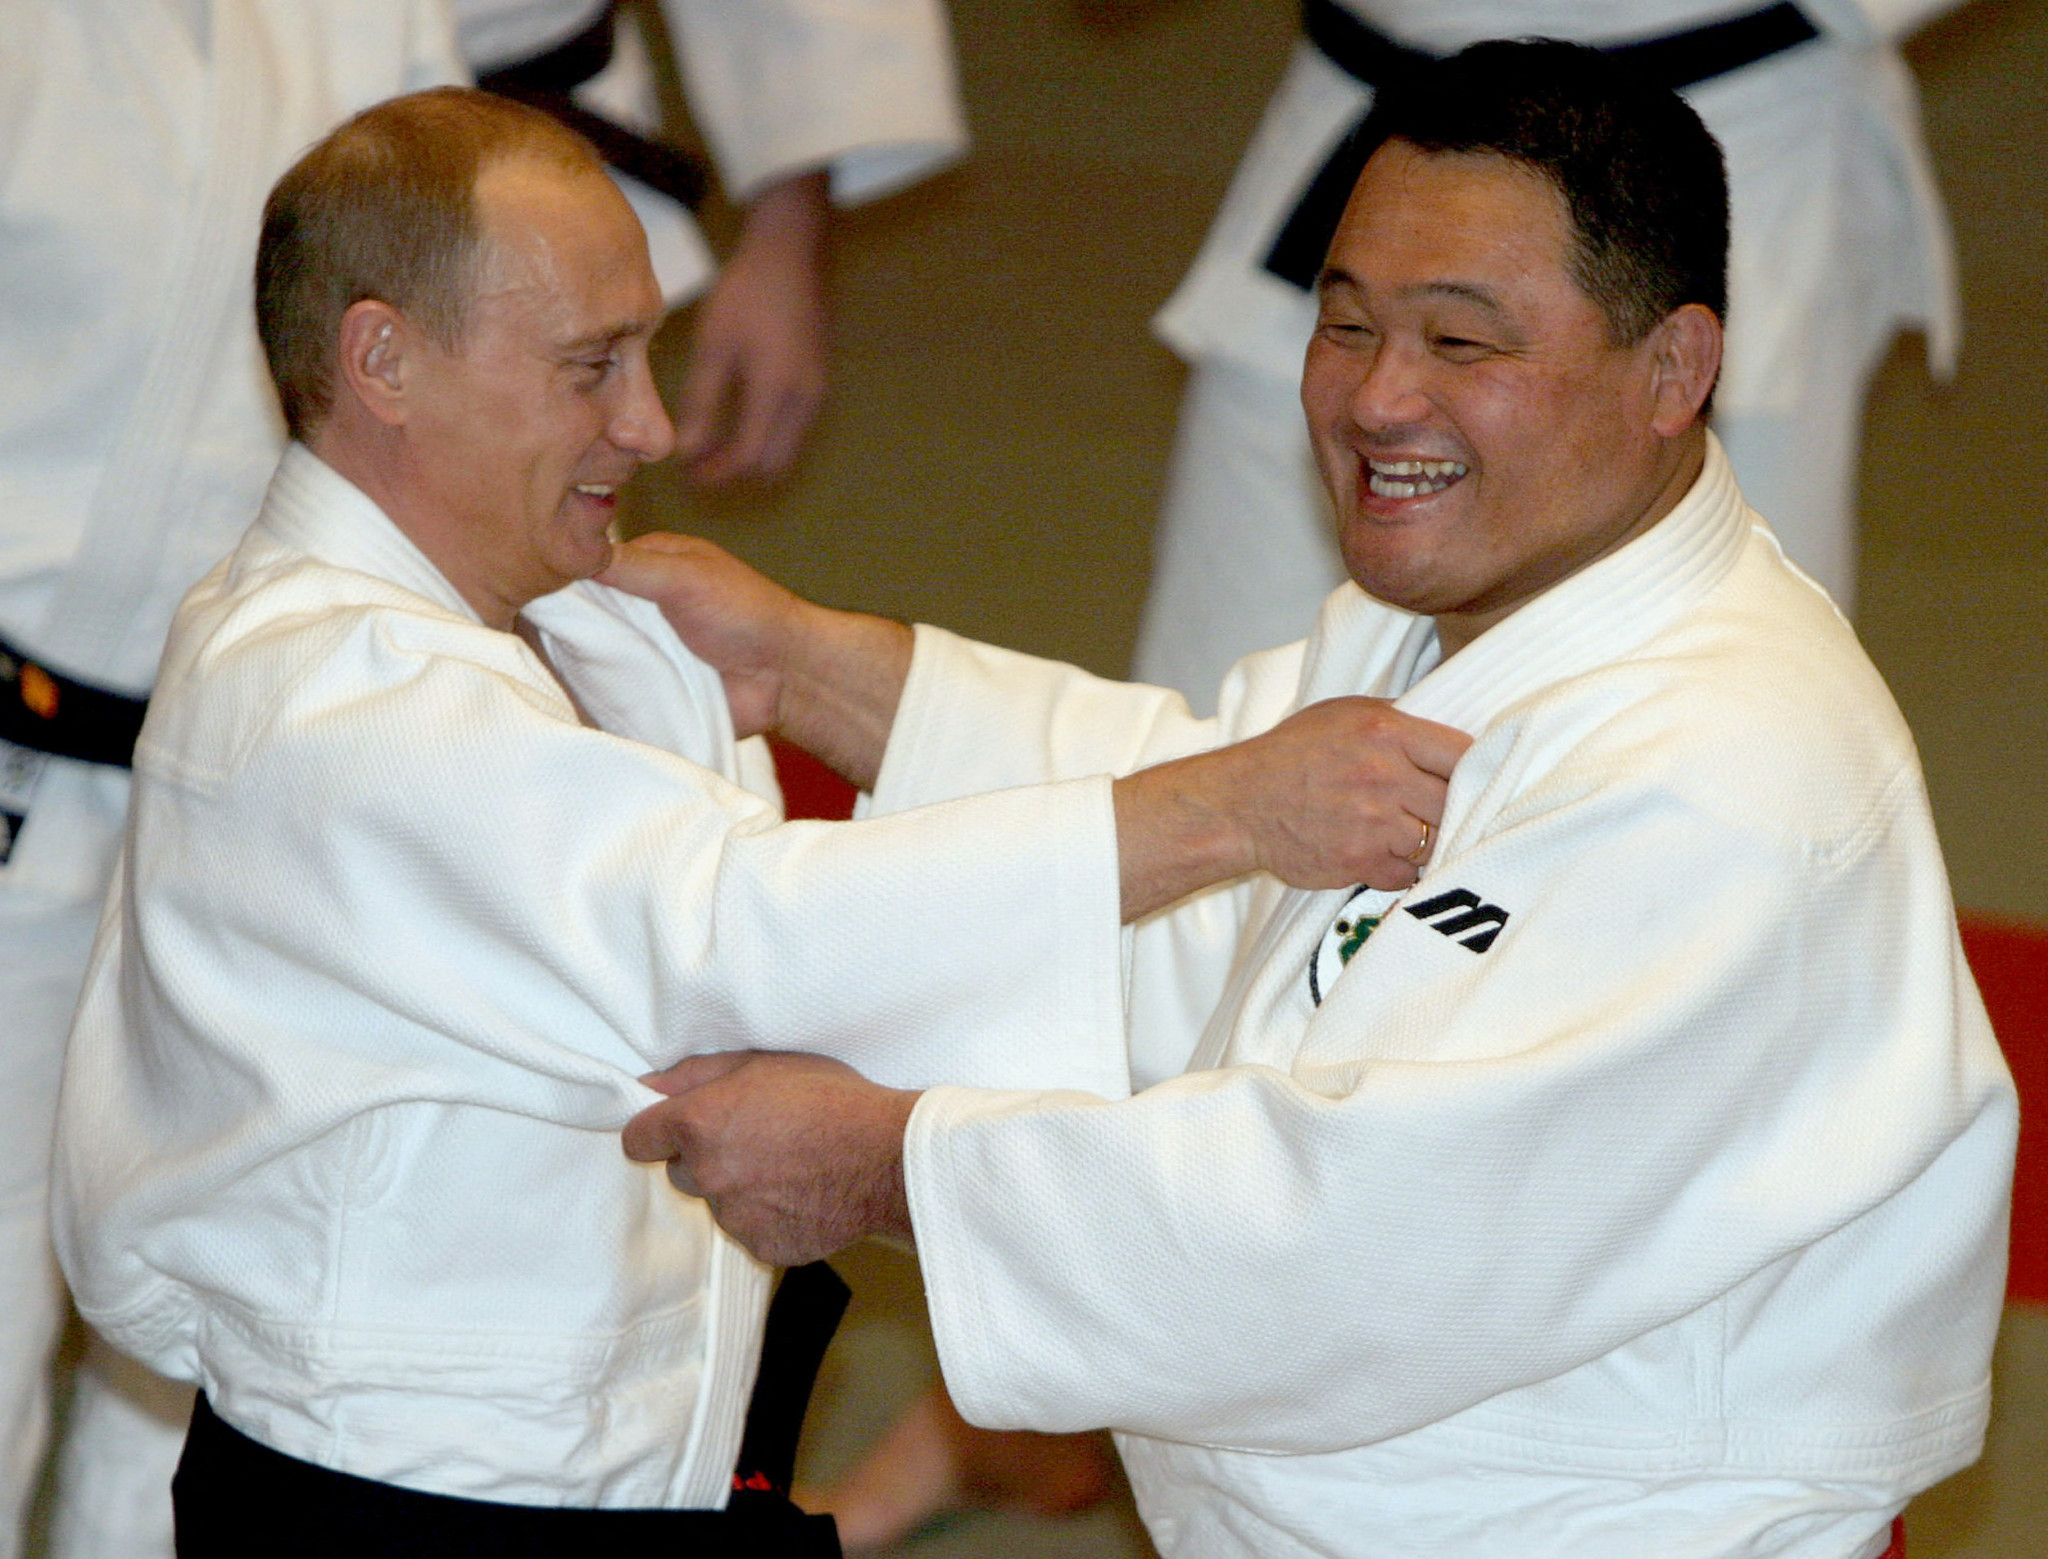 Japan judo chief Yamashita says Putin’s war on Ukraine "against the ethos of judo"